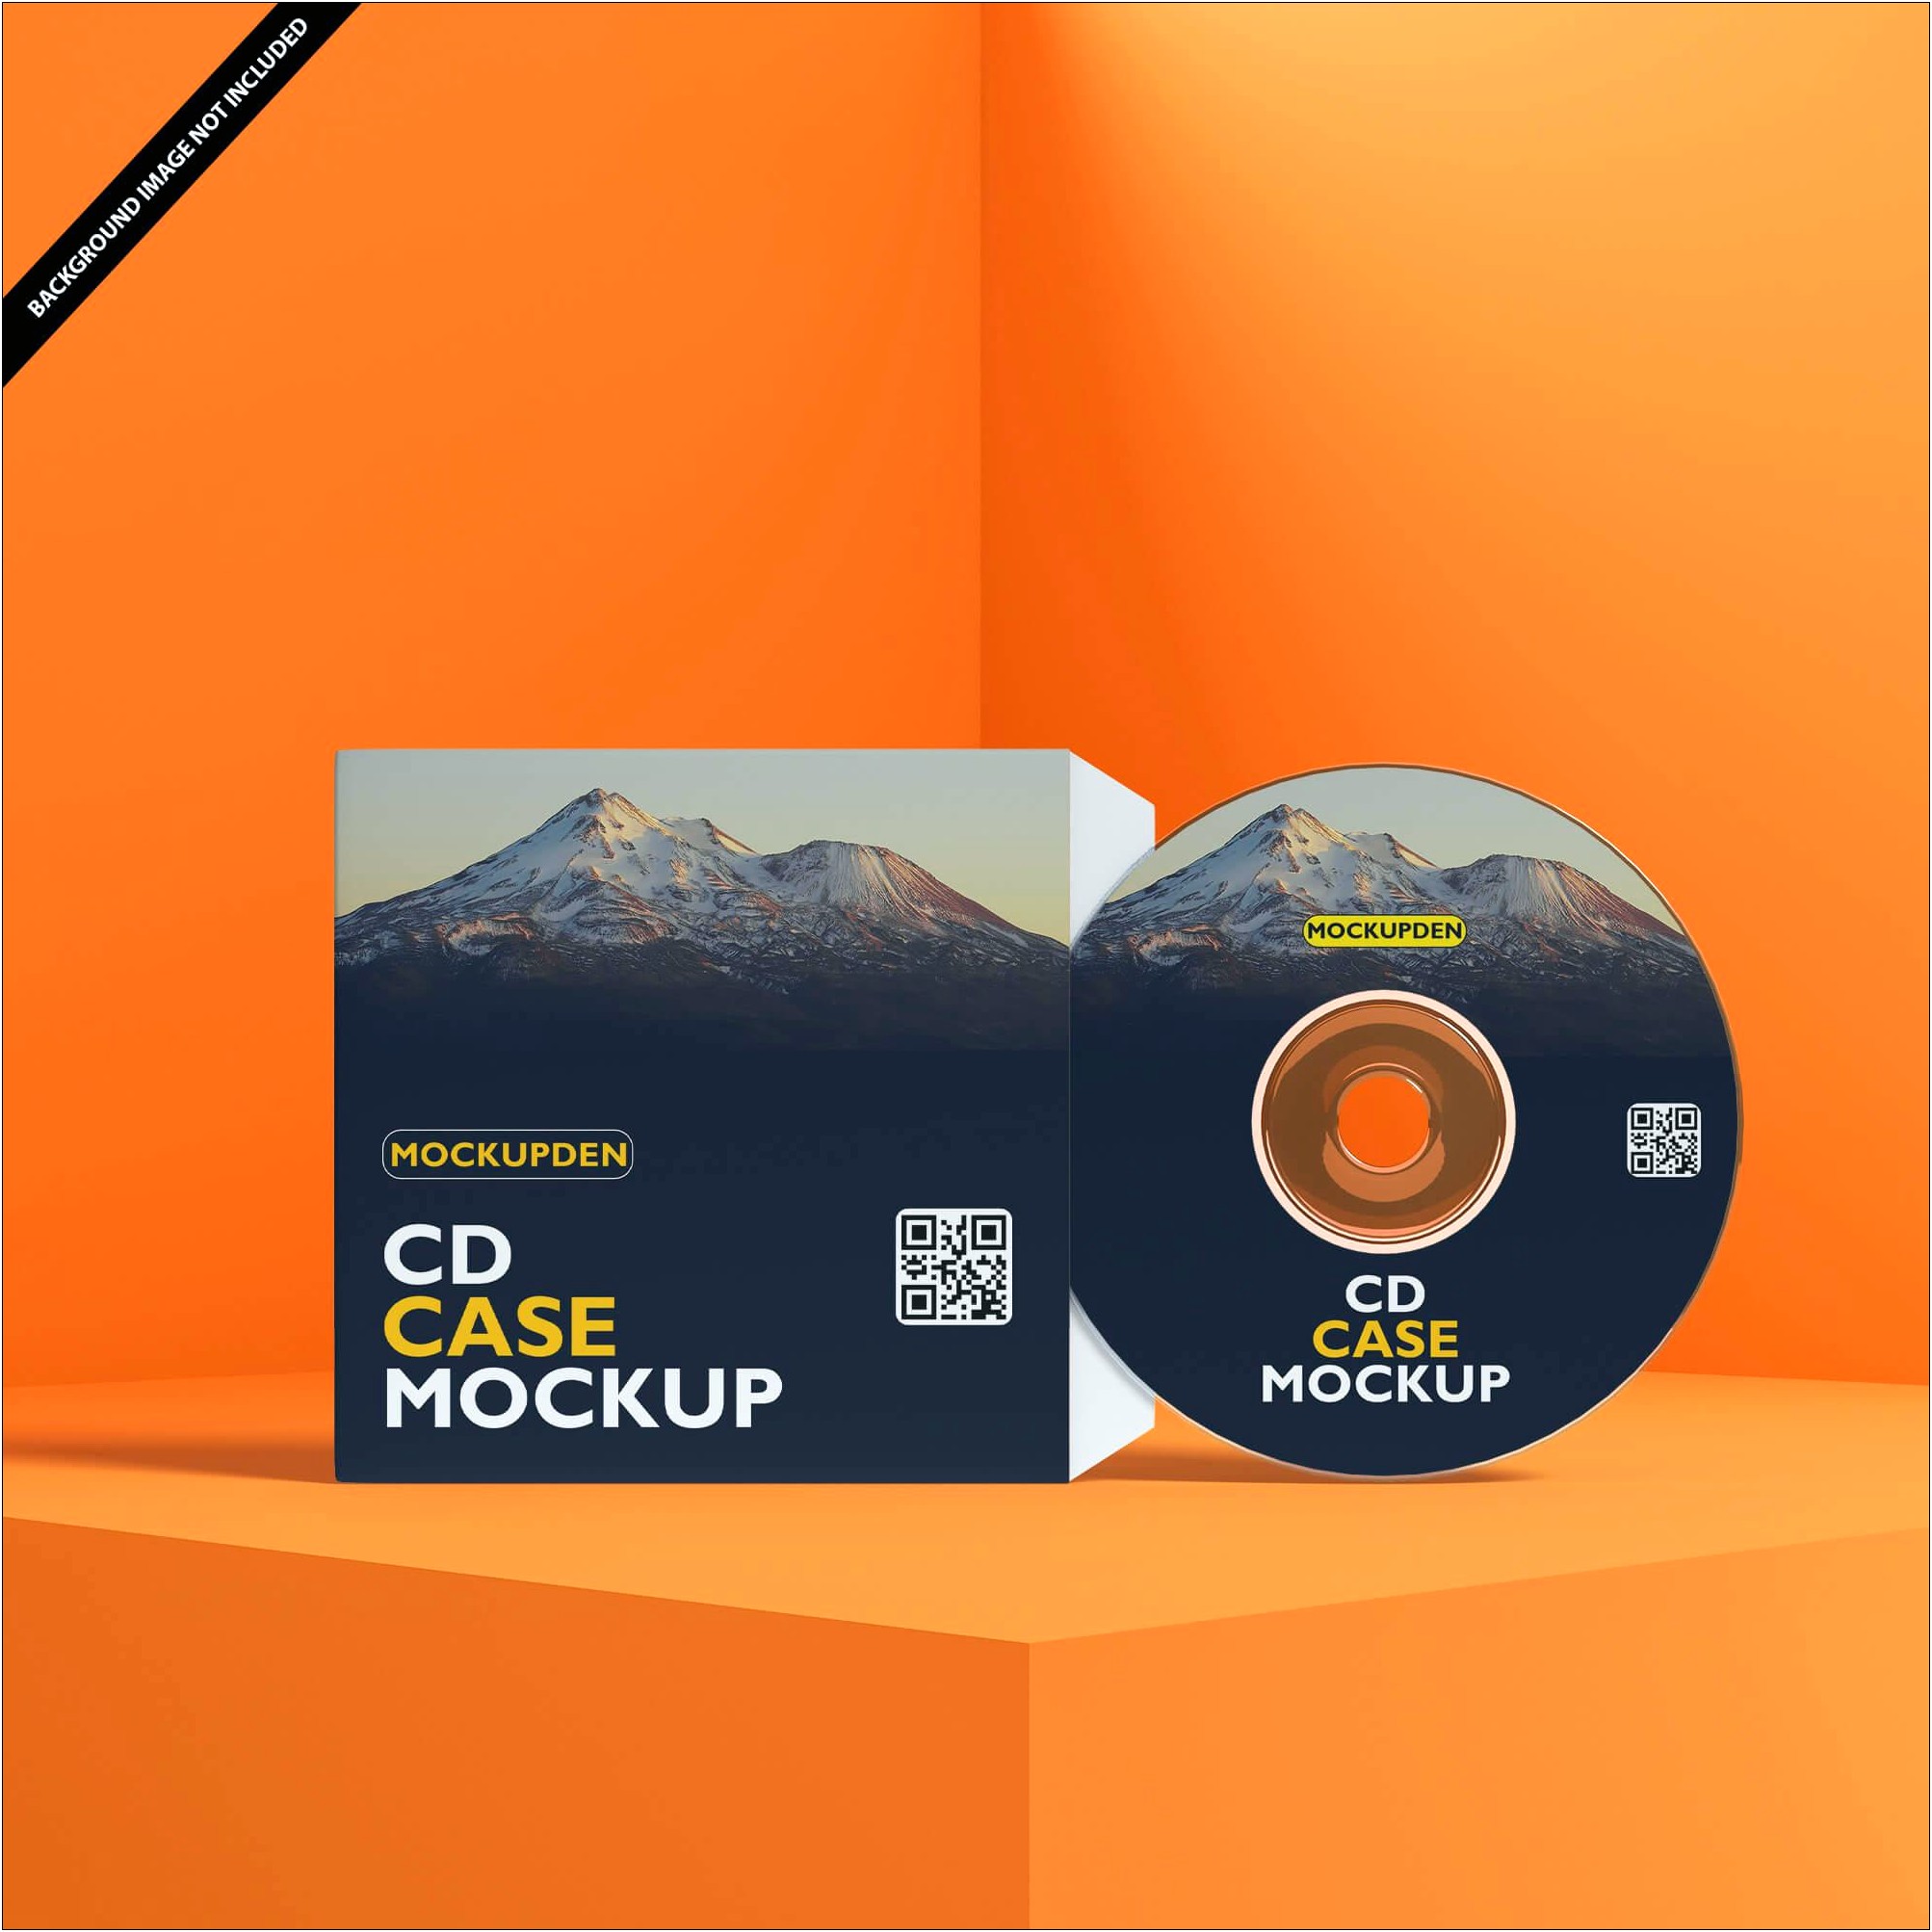 cd-label-template-psd-free-download-templates-resume-designs-dejqwzxvoa